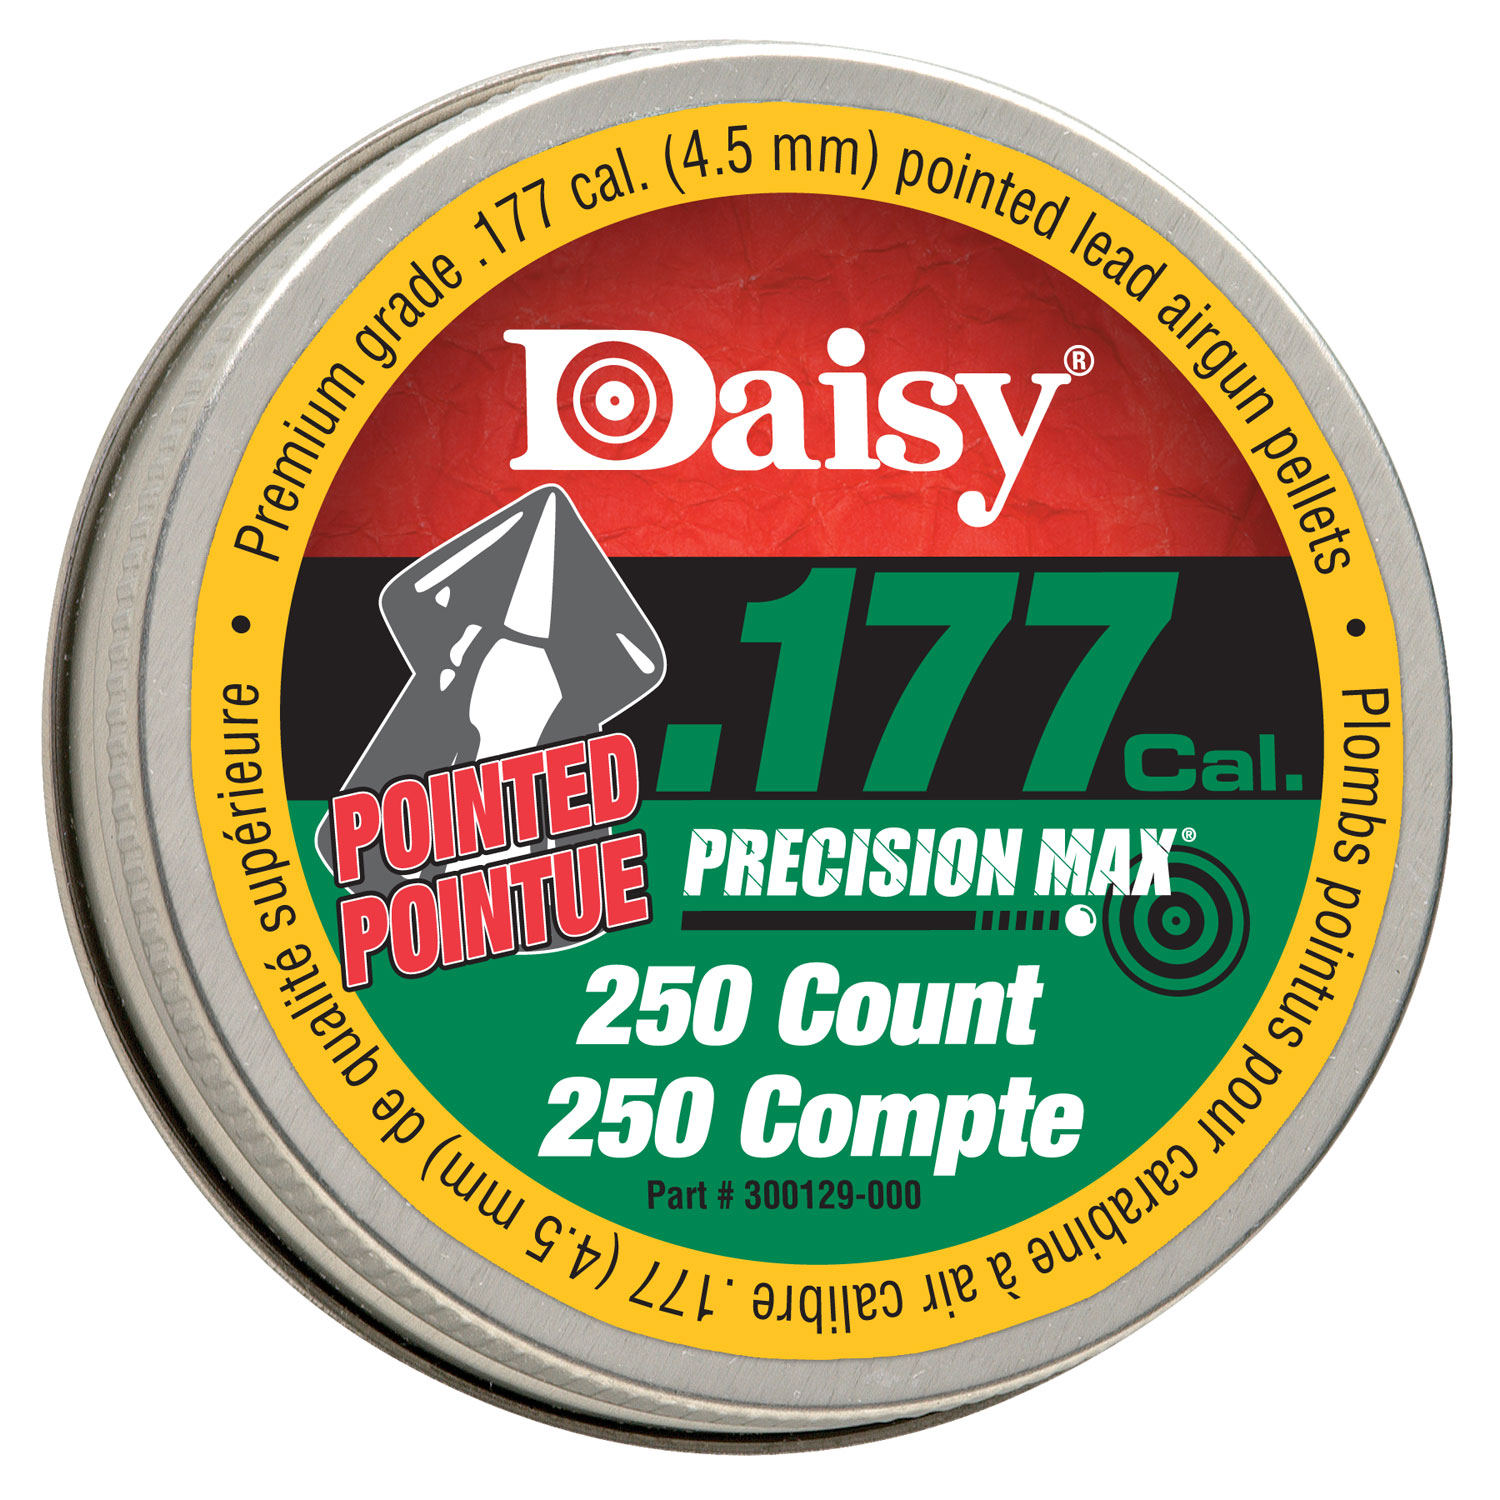 Daisy 987777406 PrecisionMax  177 Pellet Lead Pointed Field Pellet 250 Per Tin